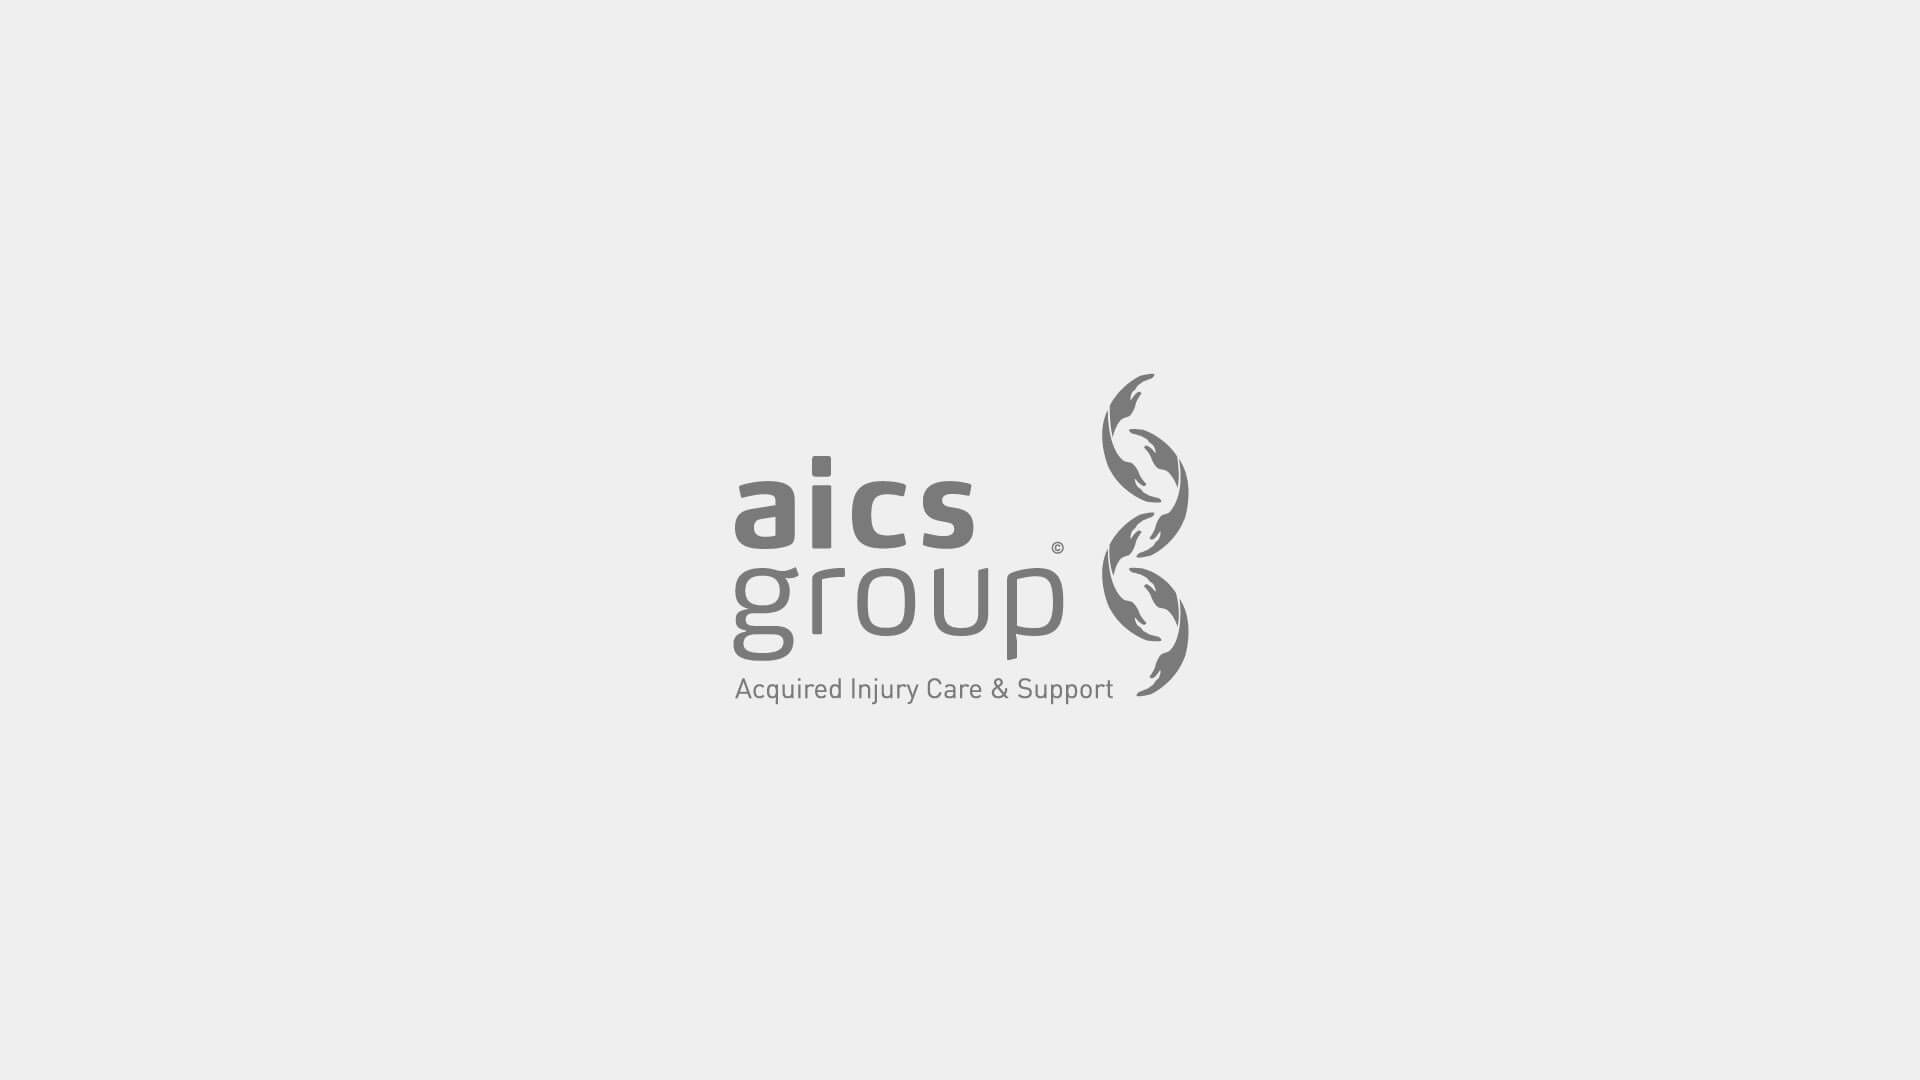 AICS_layout_06c